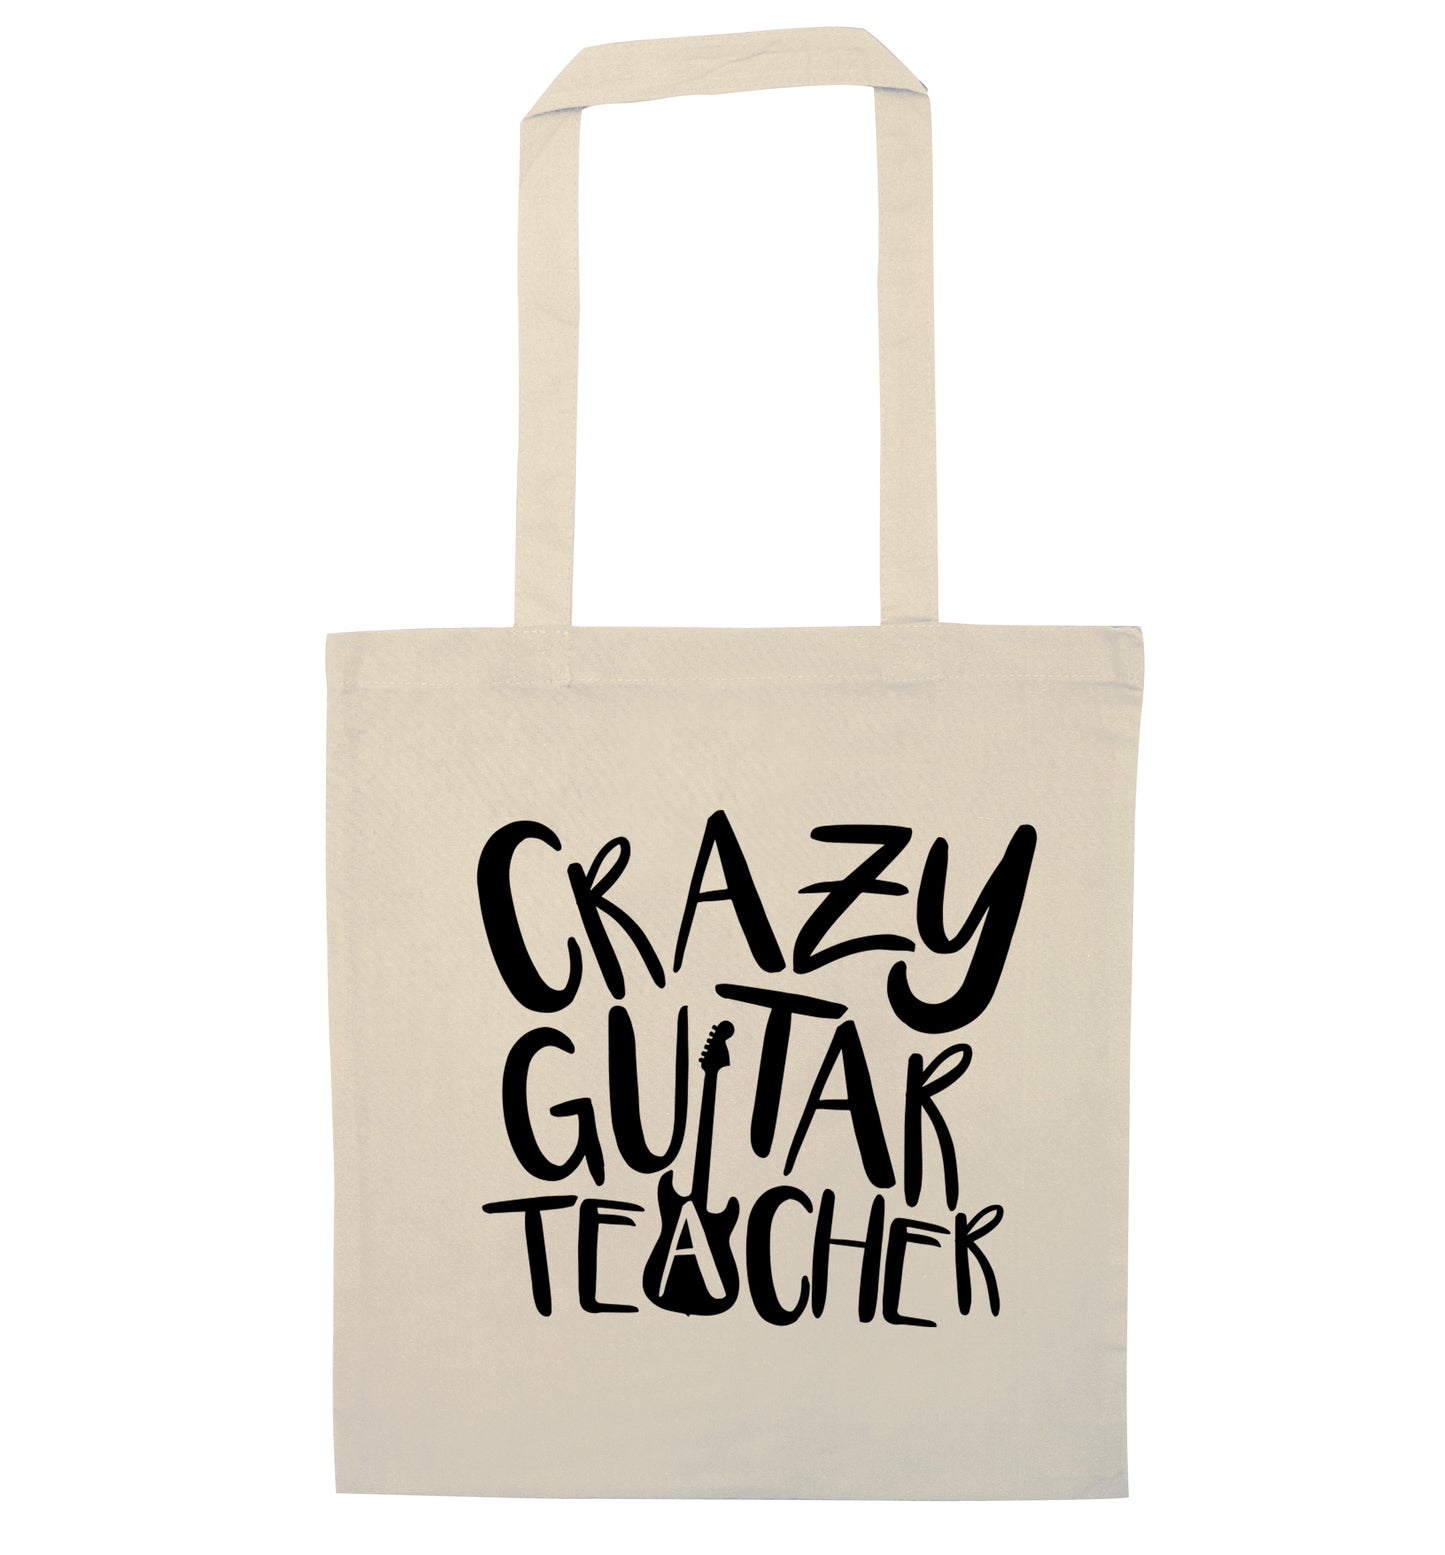 Crazy guitar teacher natural tote bag